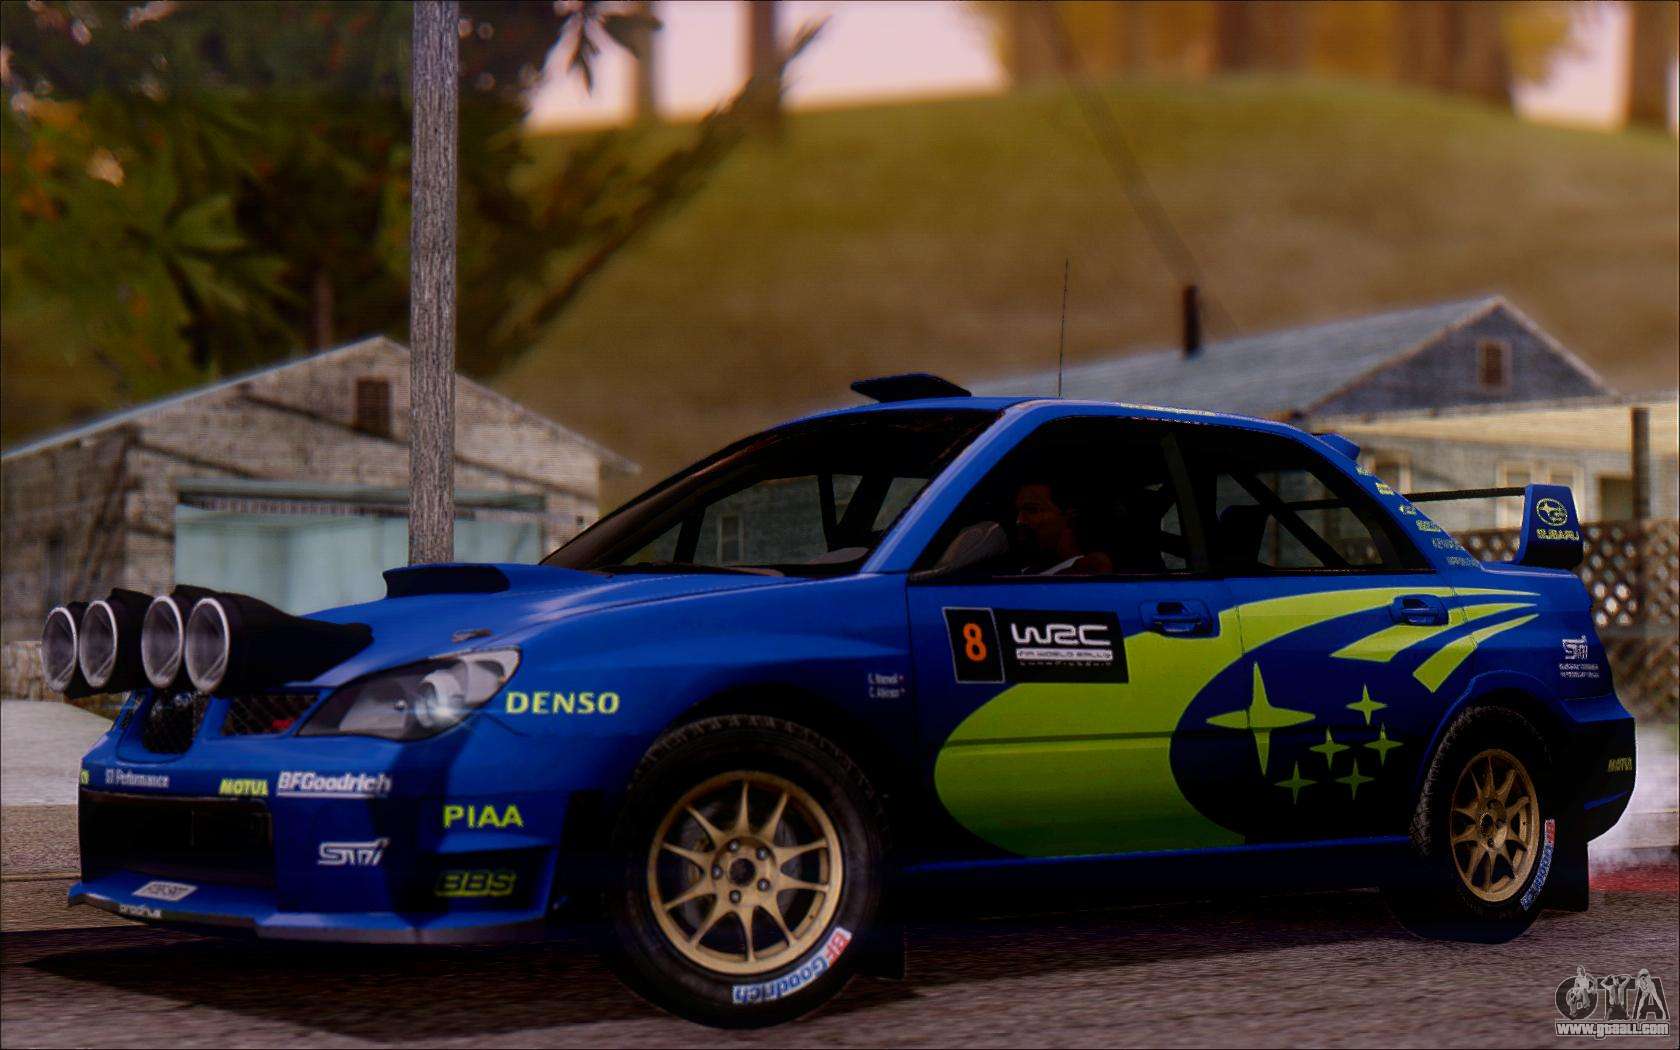 Subaru Impreza WRX STI WRC for GTA San Andreas